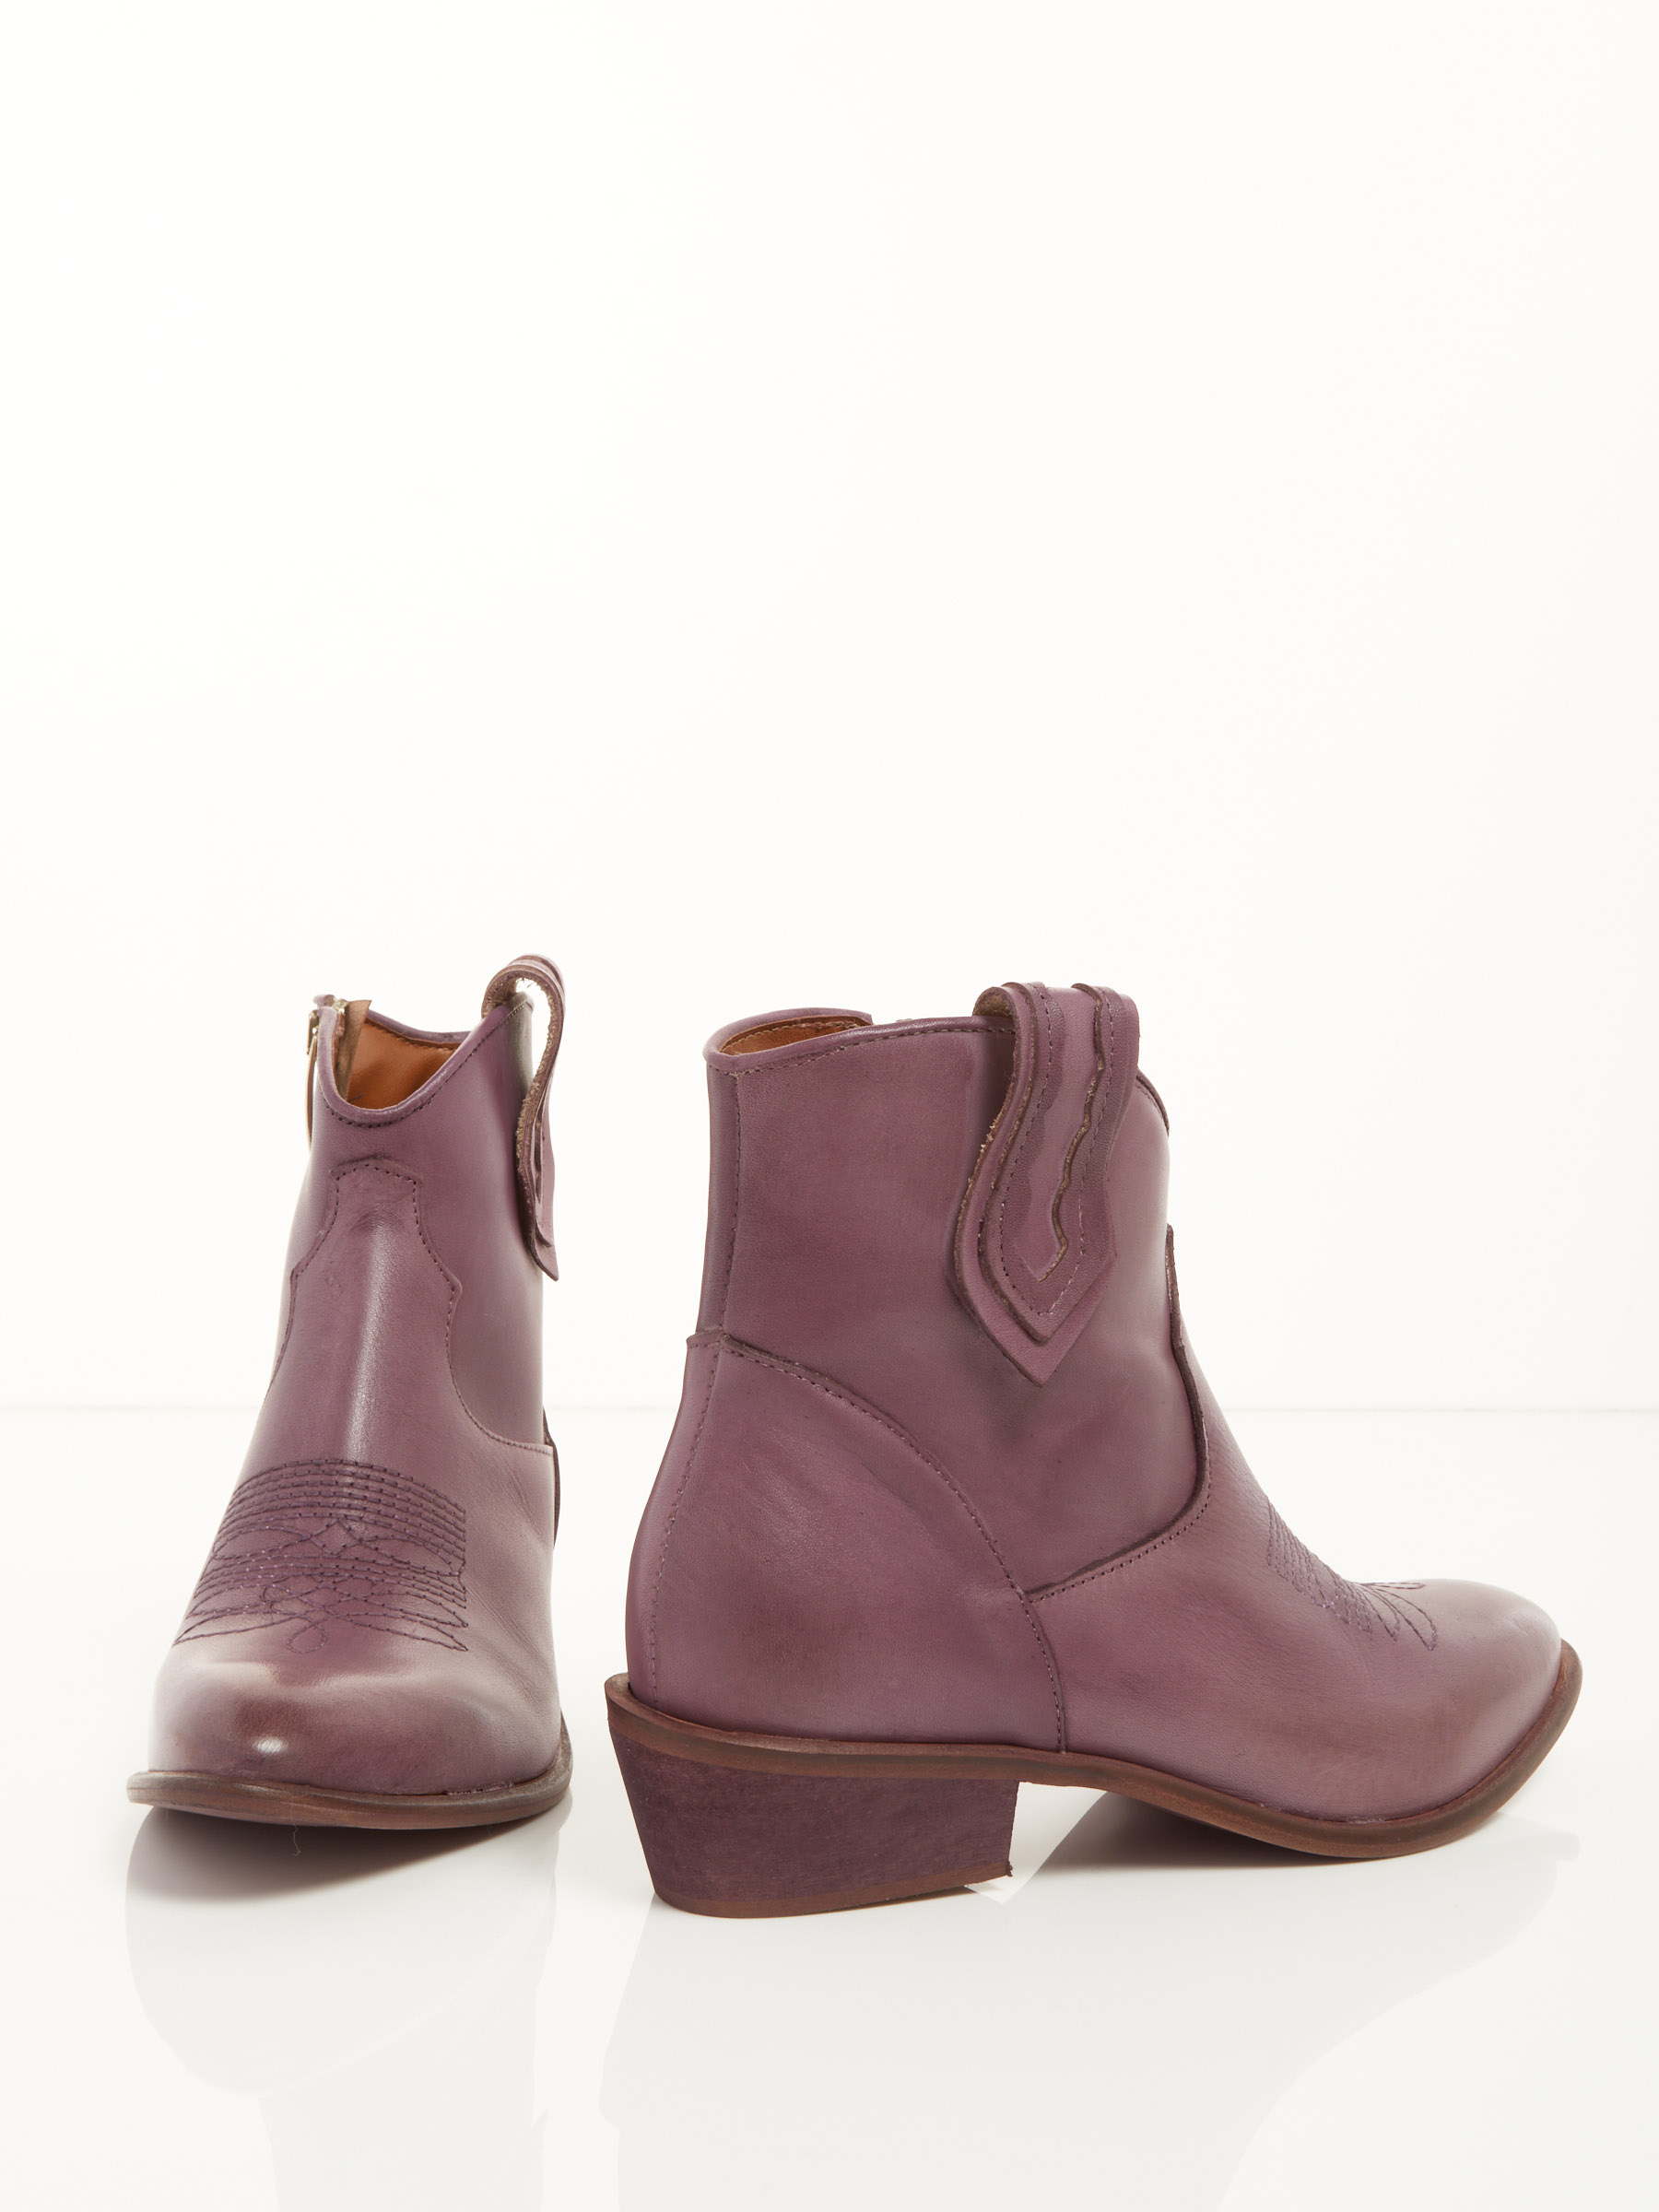 Vendita Leather Cowboy Ankle Boots F0545554-0499 Sito Ufficiale